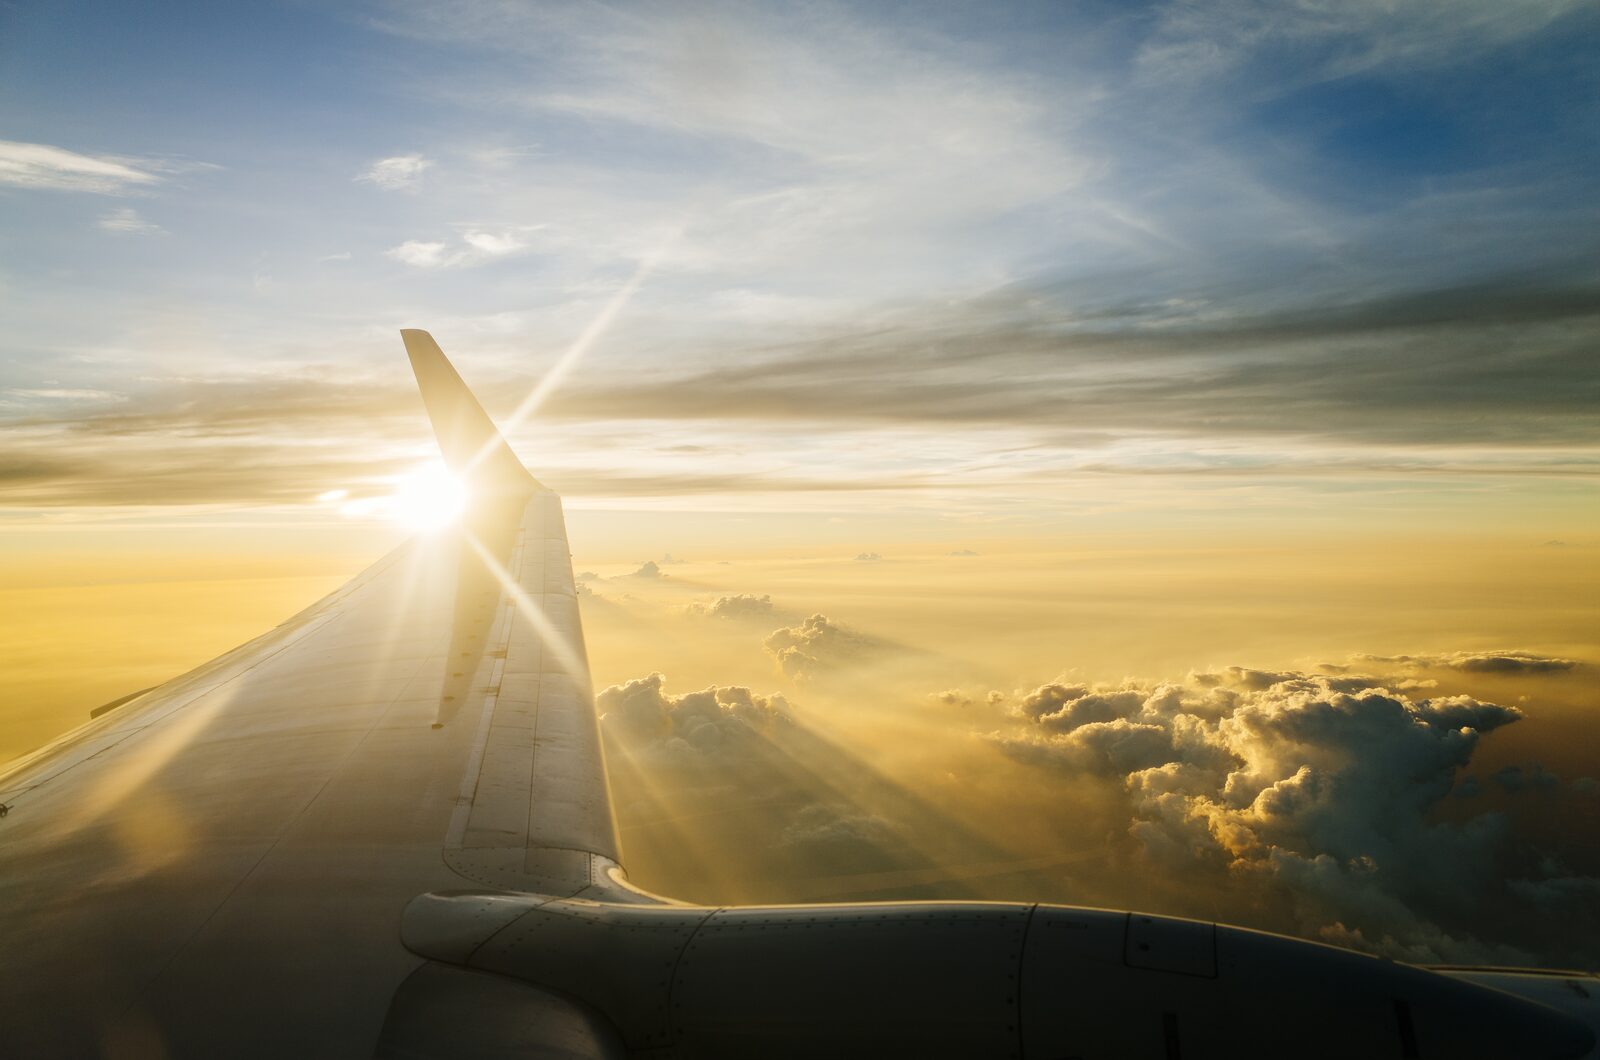 Vleugel van Transavia vliegtuig tegen de ondergaande zon